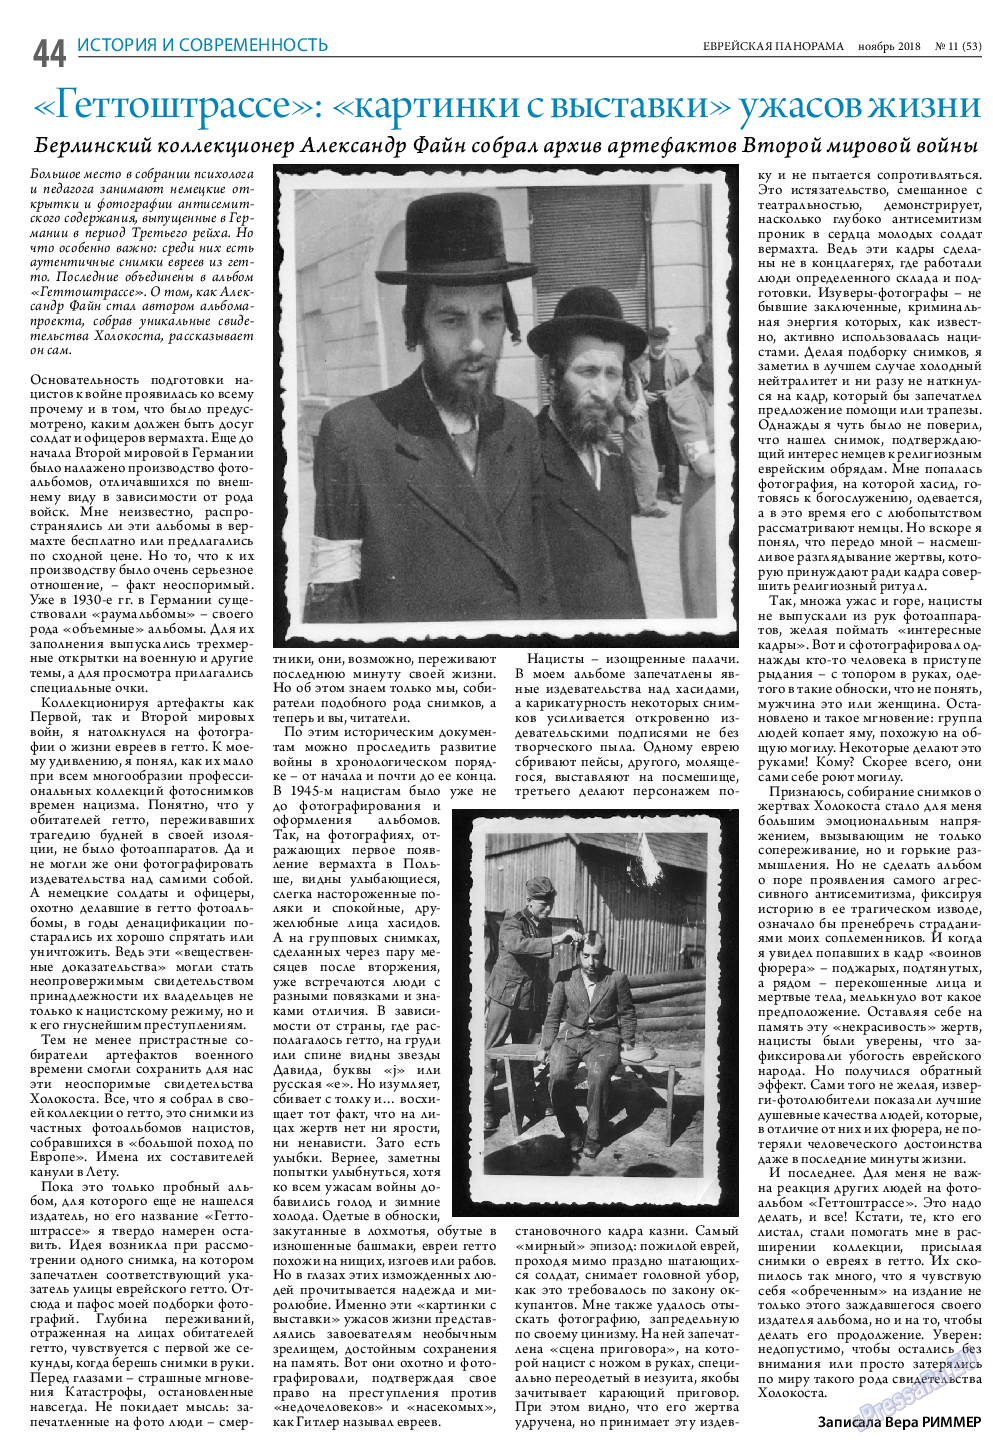 Еврейская панорама, газета. 2018 №11 стр.44